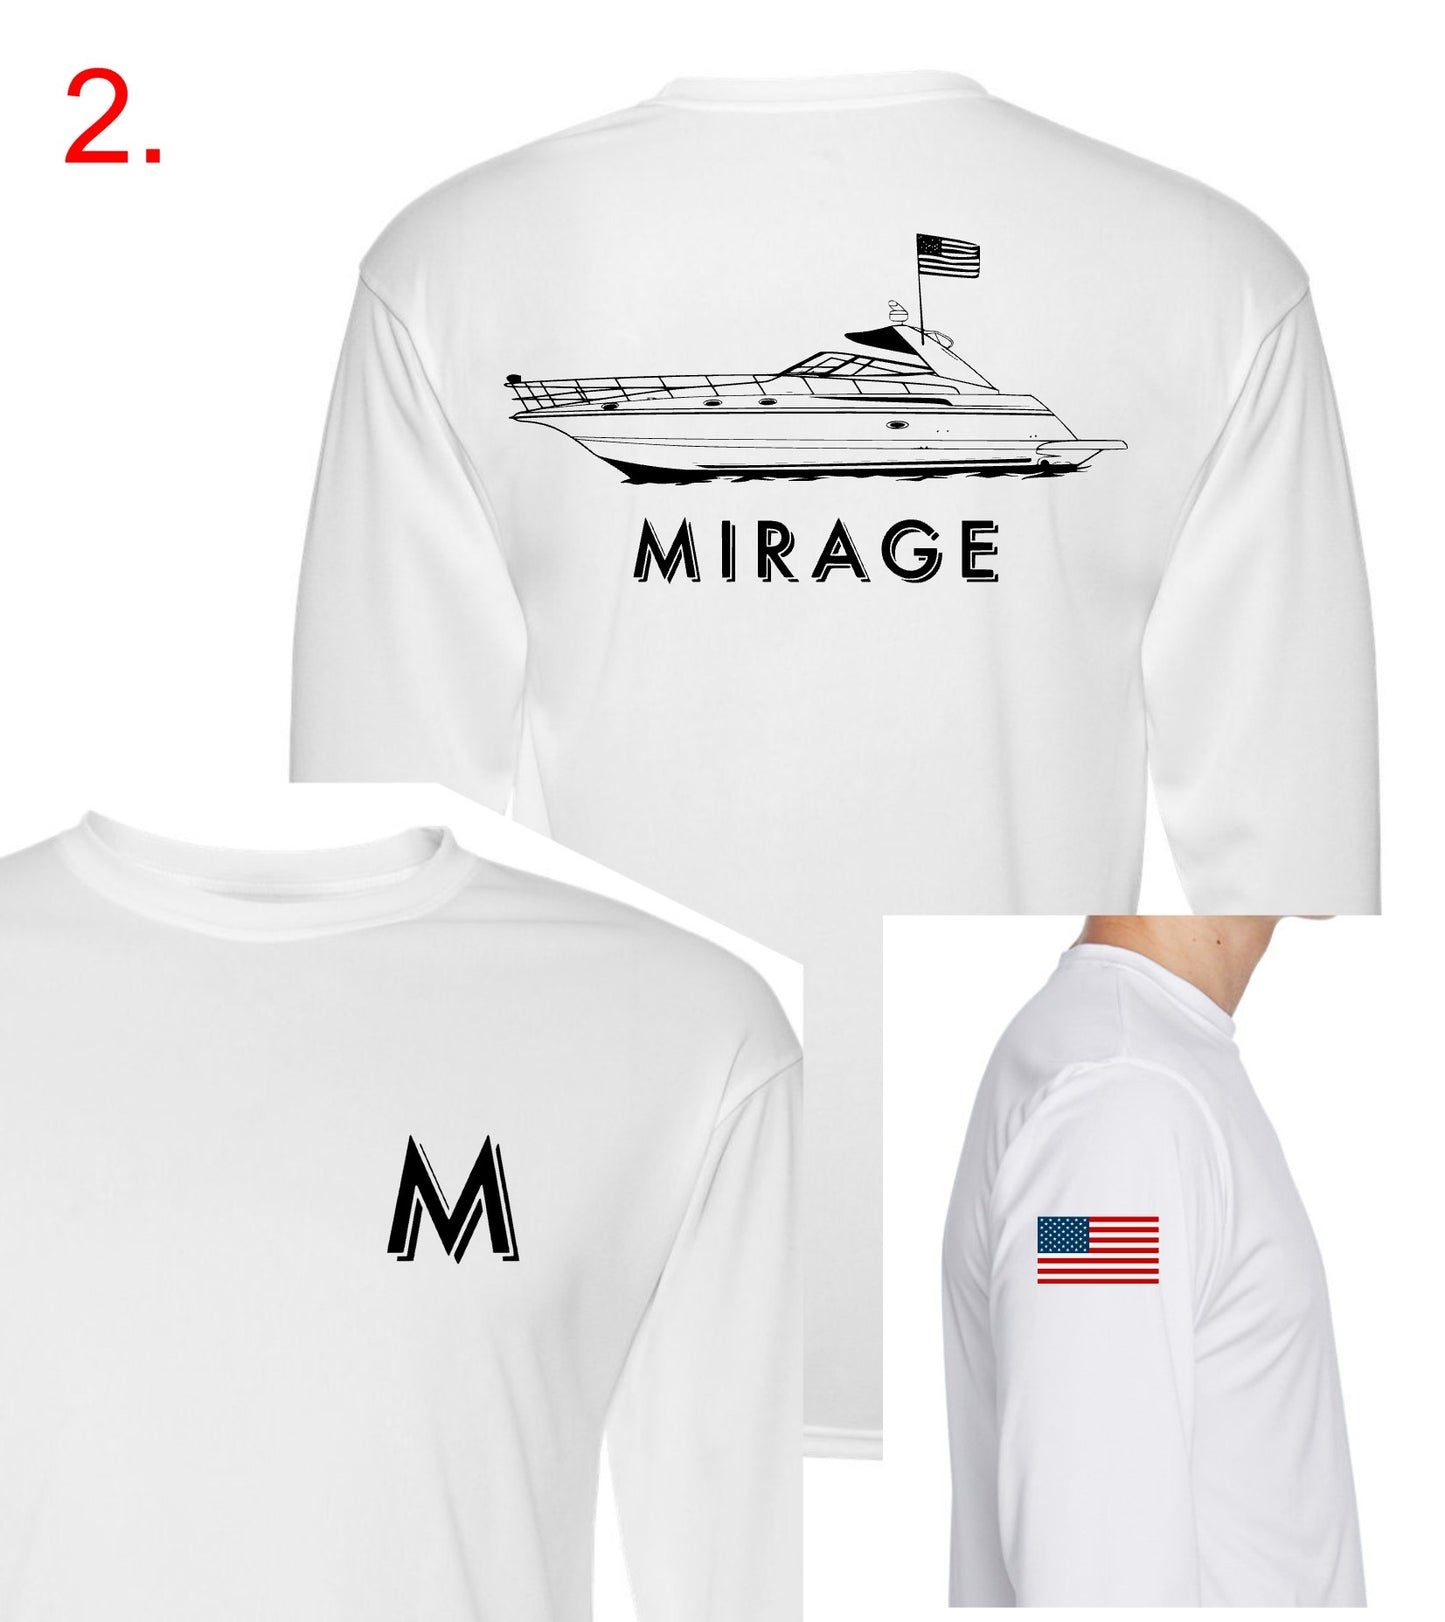 Mirage - 2 Custom Long Sleeve Shirts